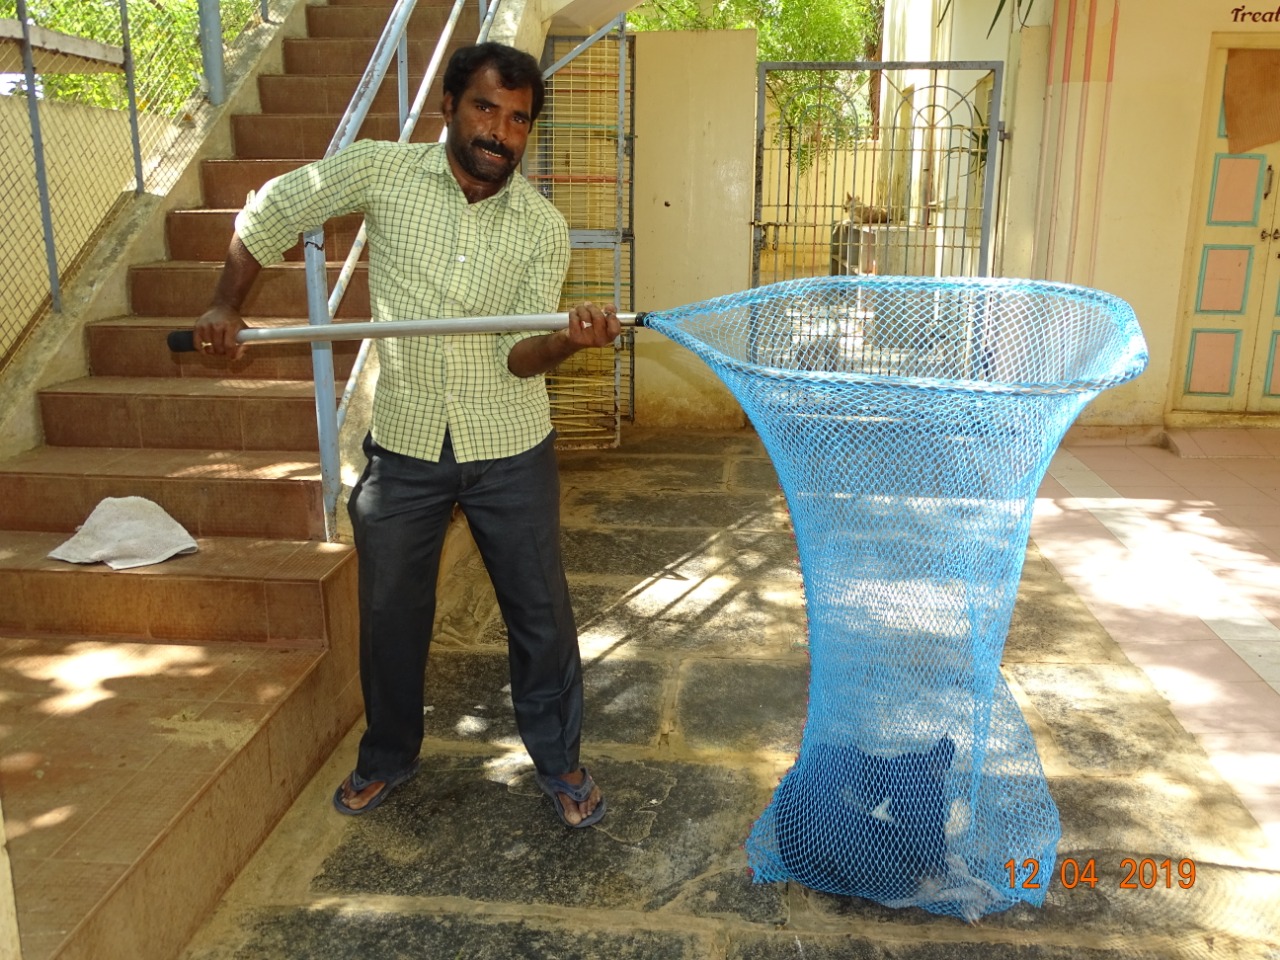 New Net Catchers Thanks to Help Animals India – Karuna Society for